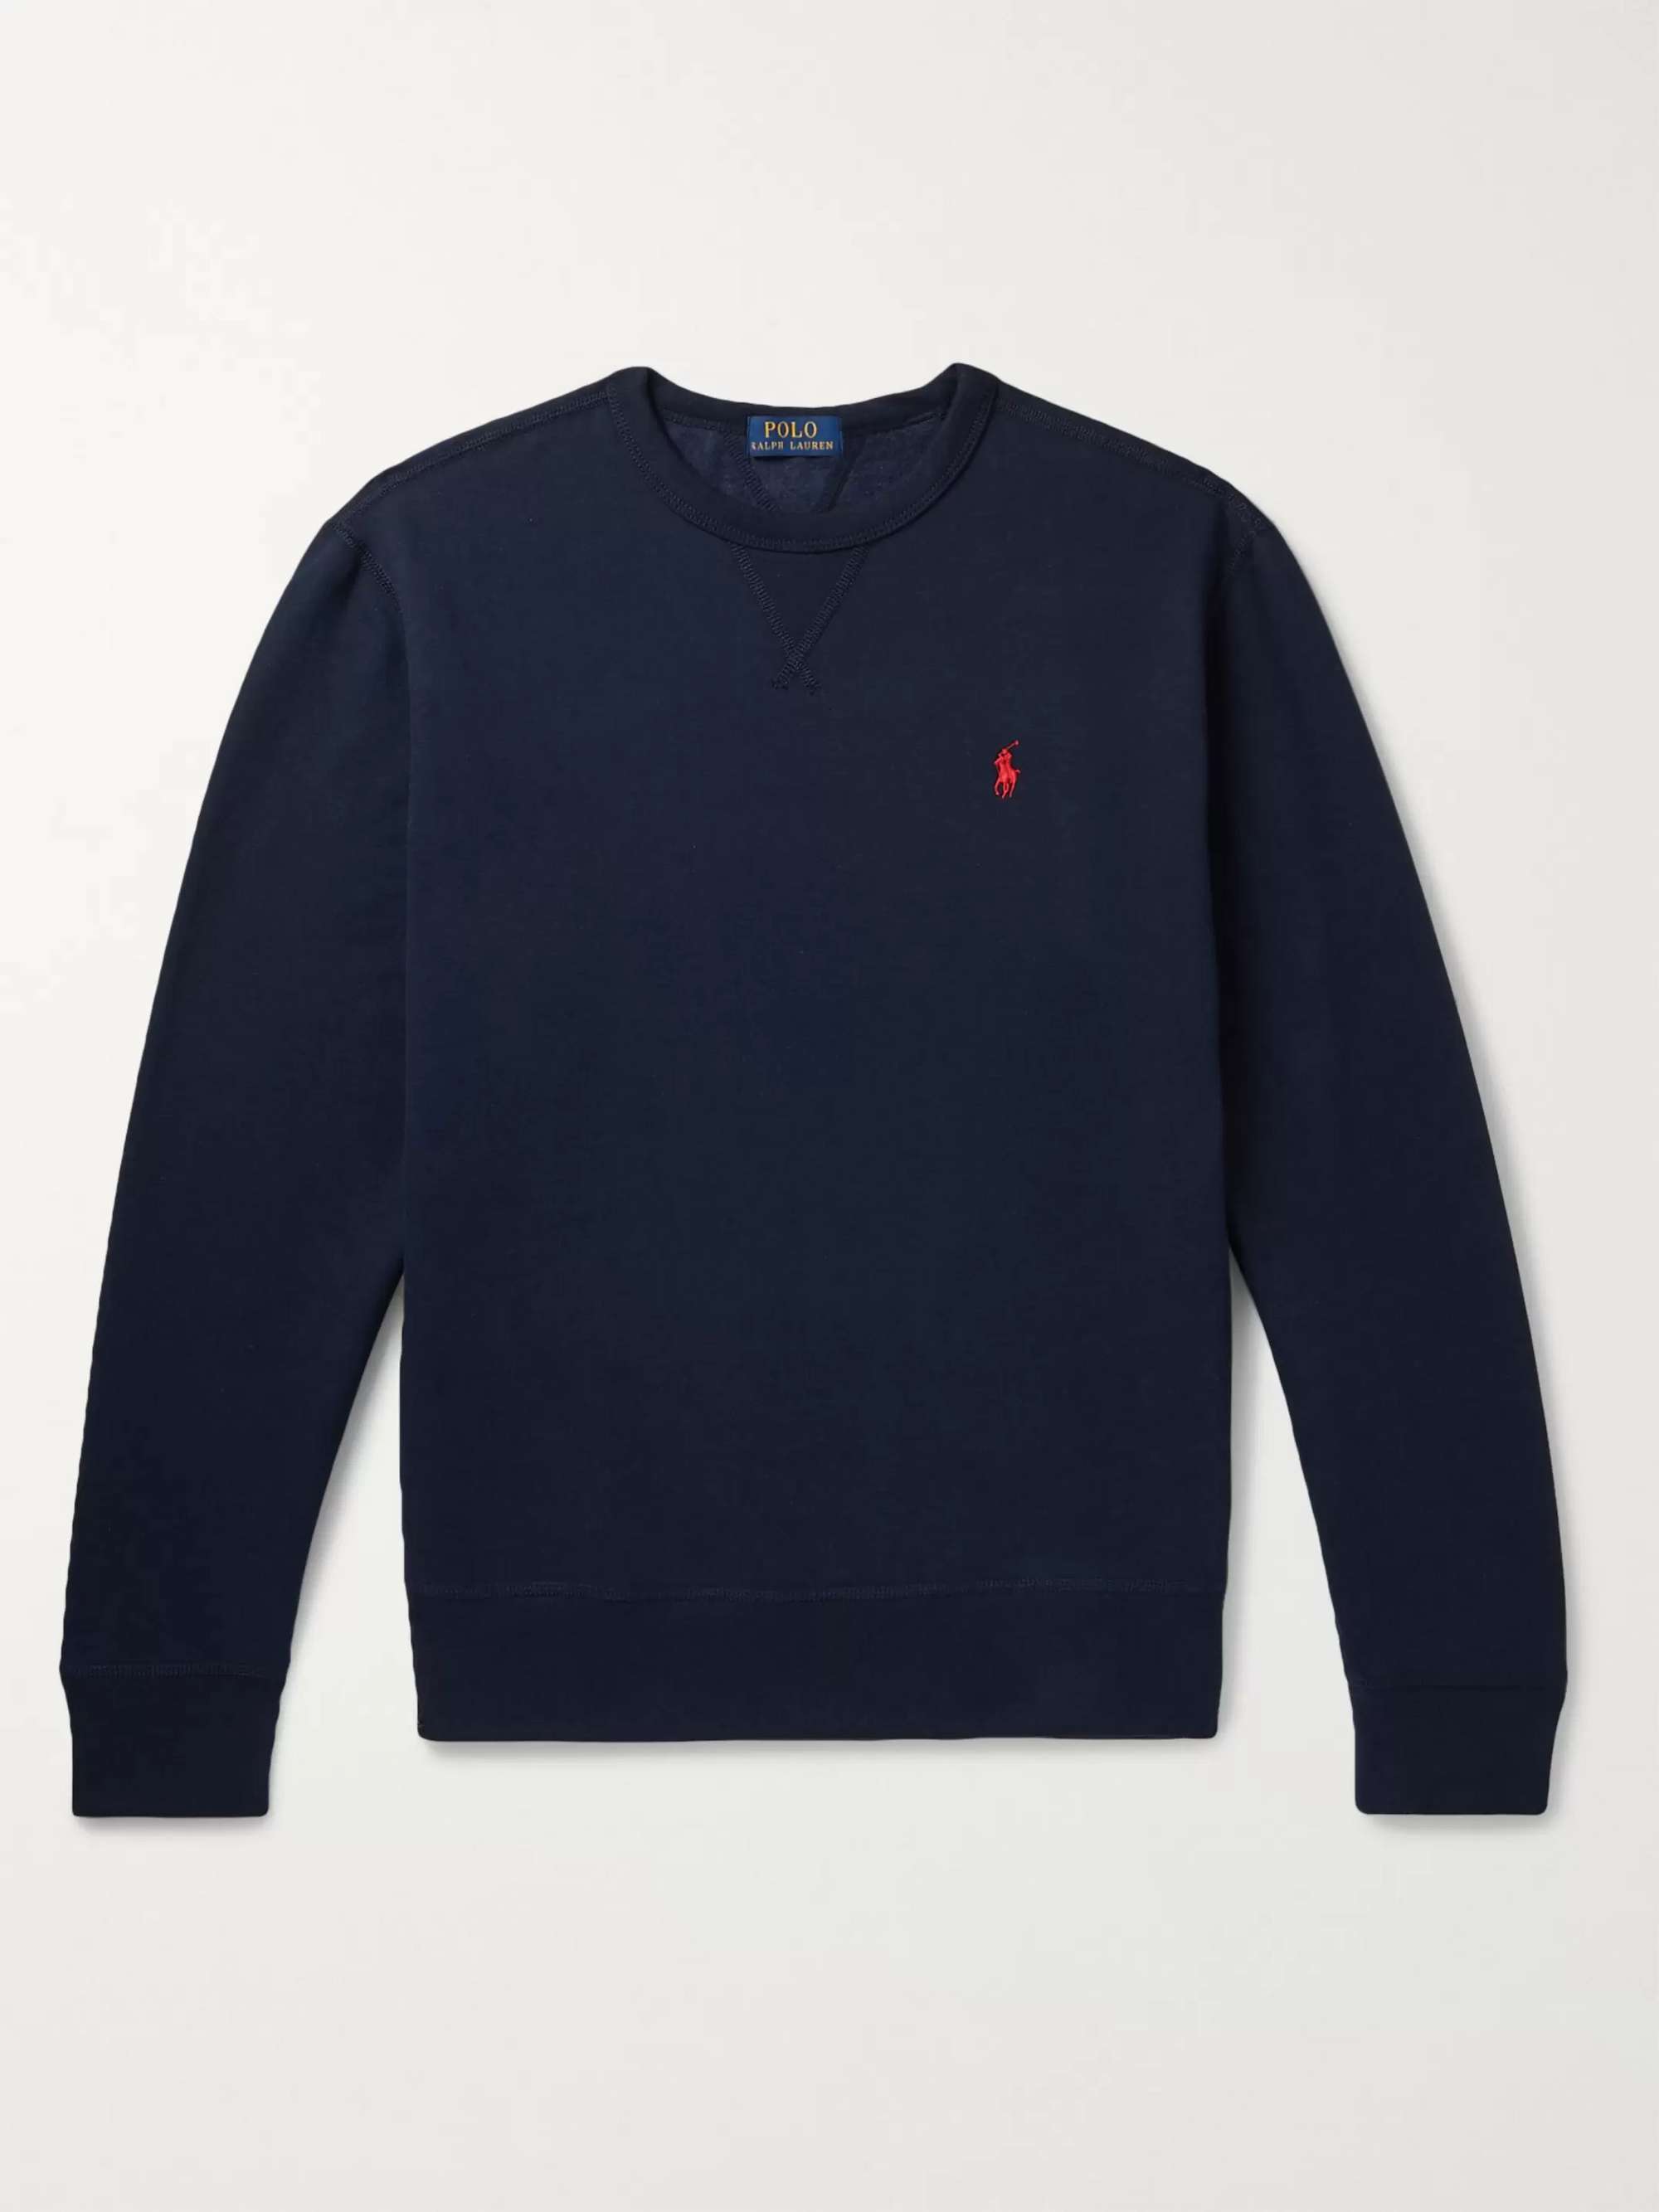 Midnight blue Logo-Embroidered Cotton-Blend Jersey Sweatshirt | POLO RALPH  LAUREN | MR PORTER